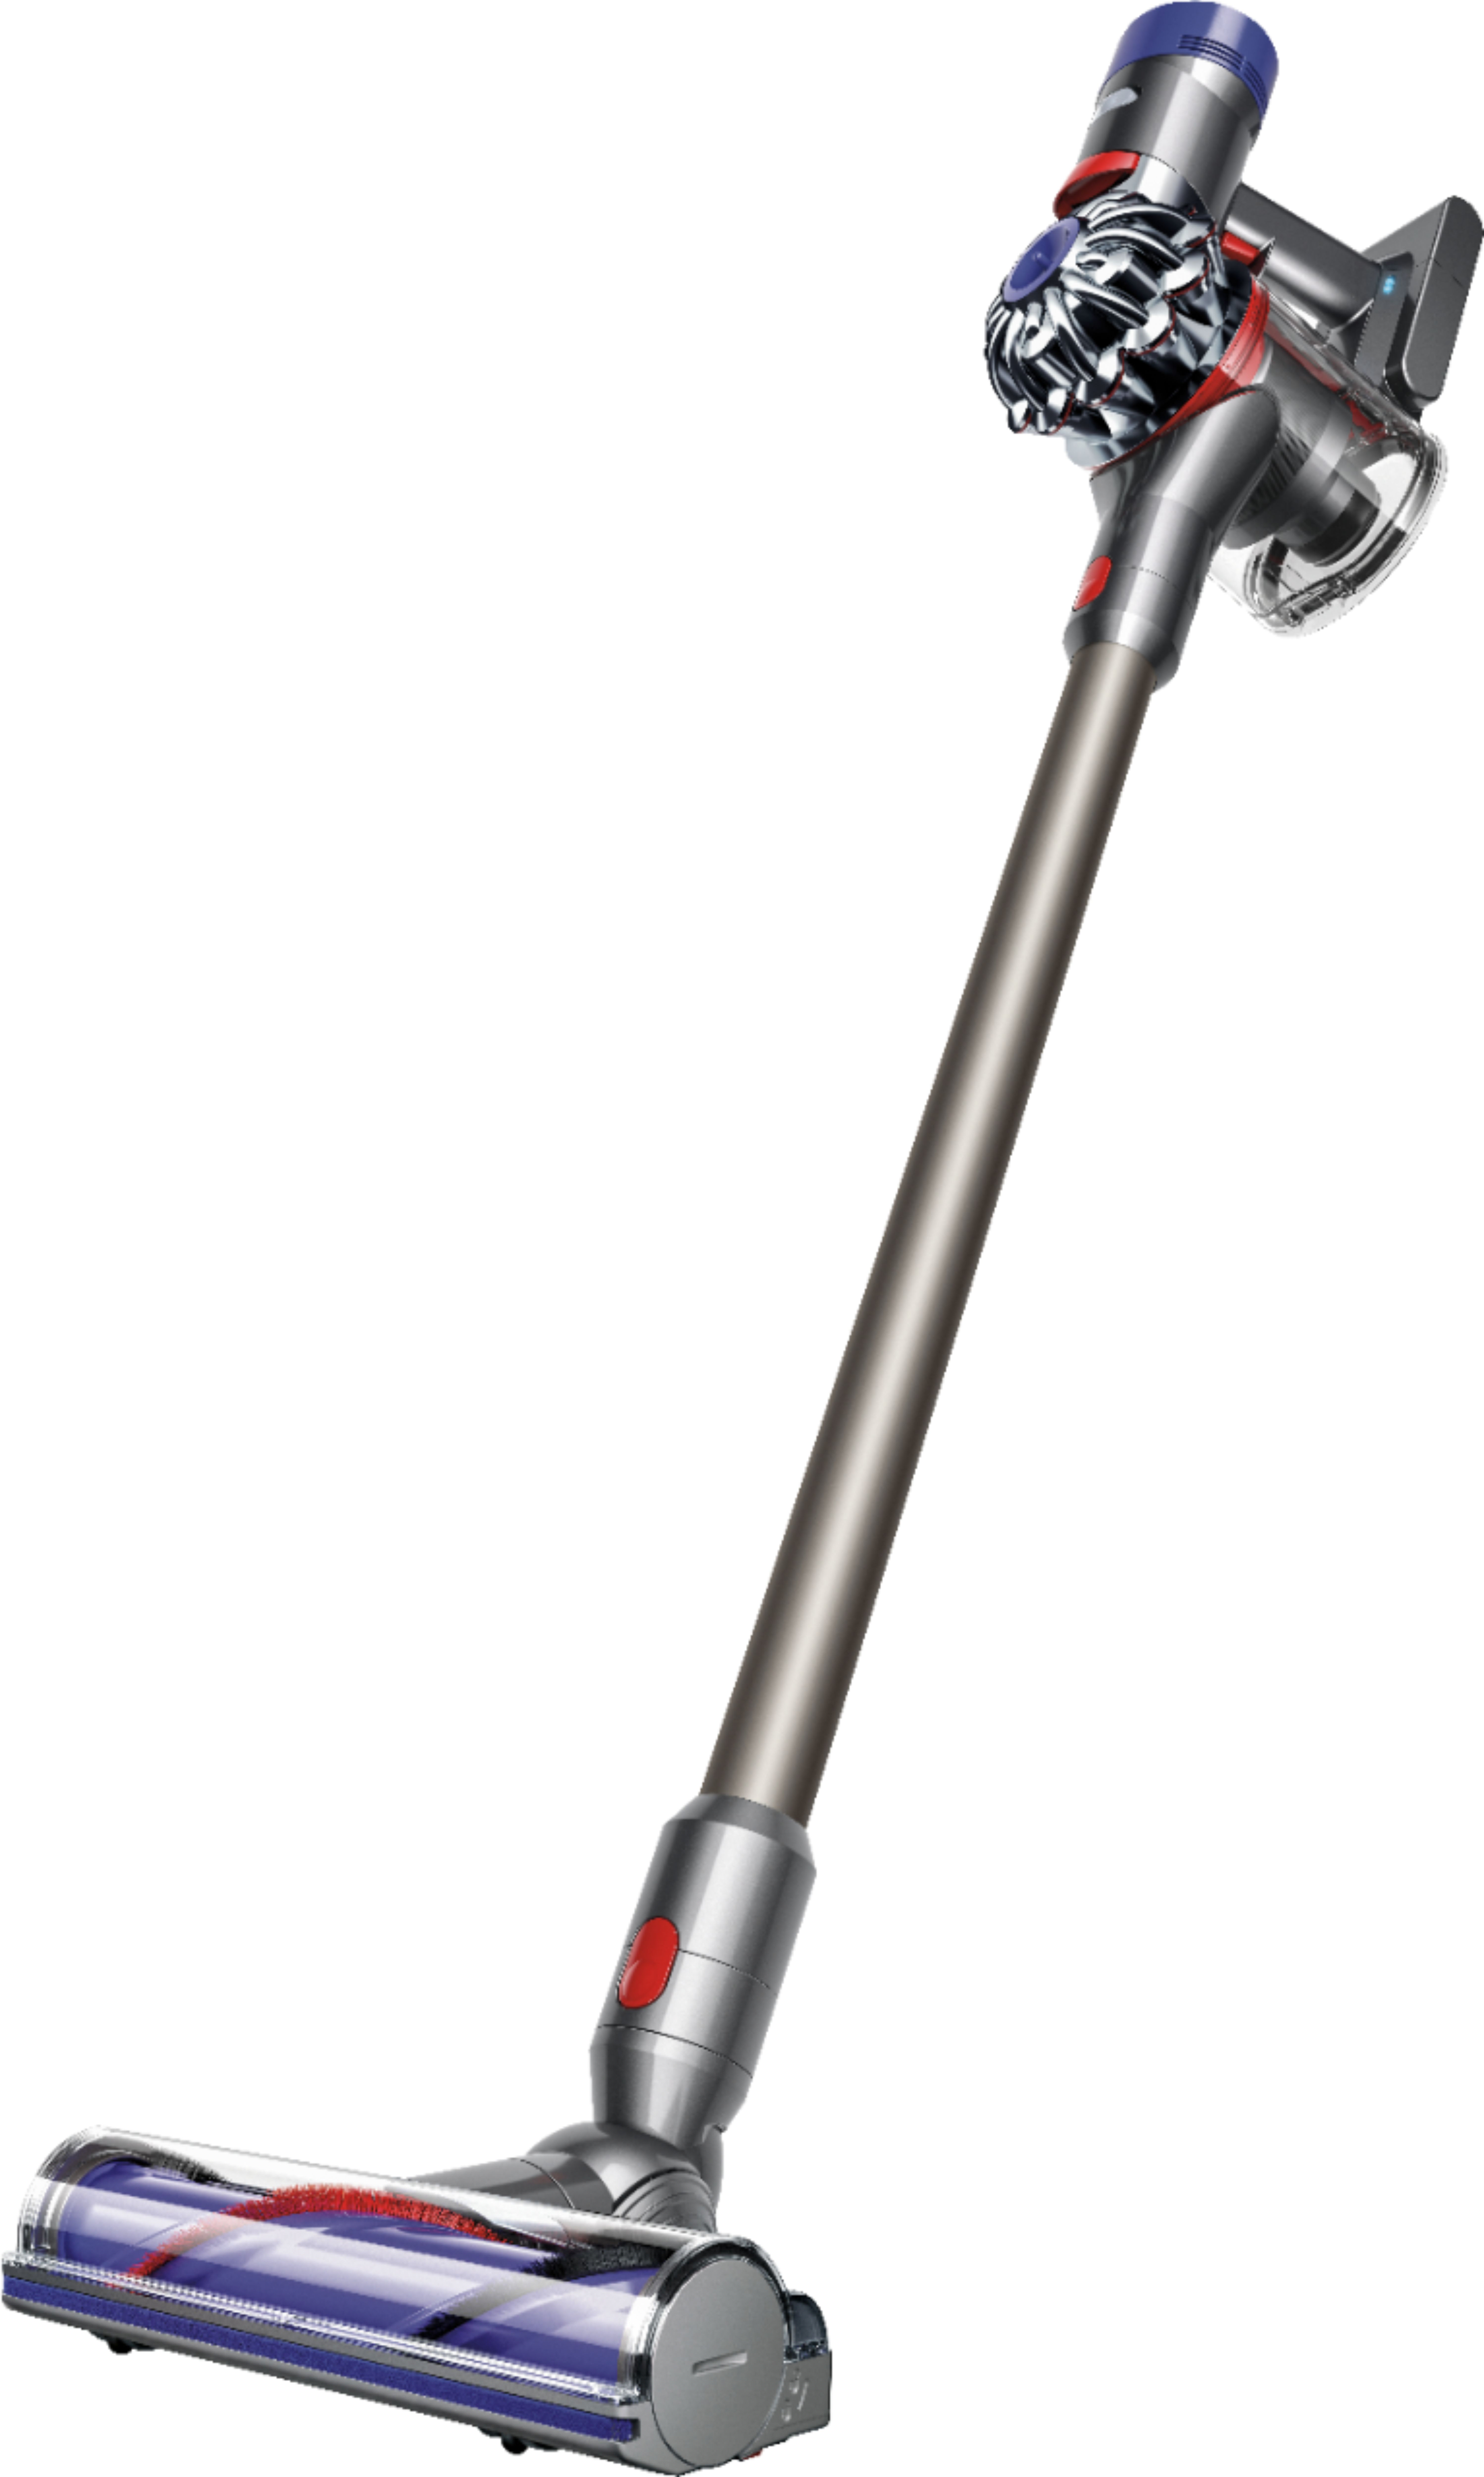 Dyson V8 Animal Cord Free Stick Vacuum, Best Dyson Cordless Vacuum For Hardwood Floors And Pet Hair